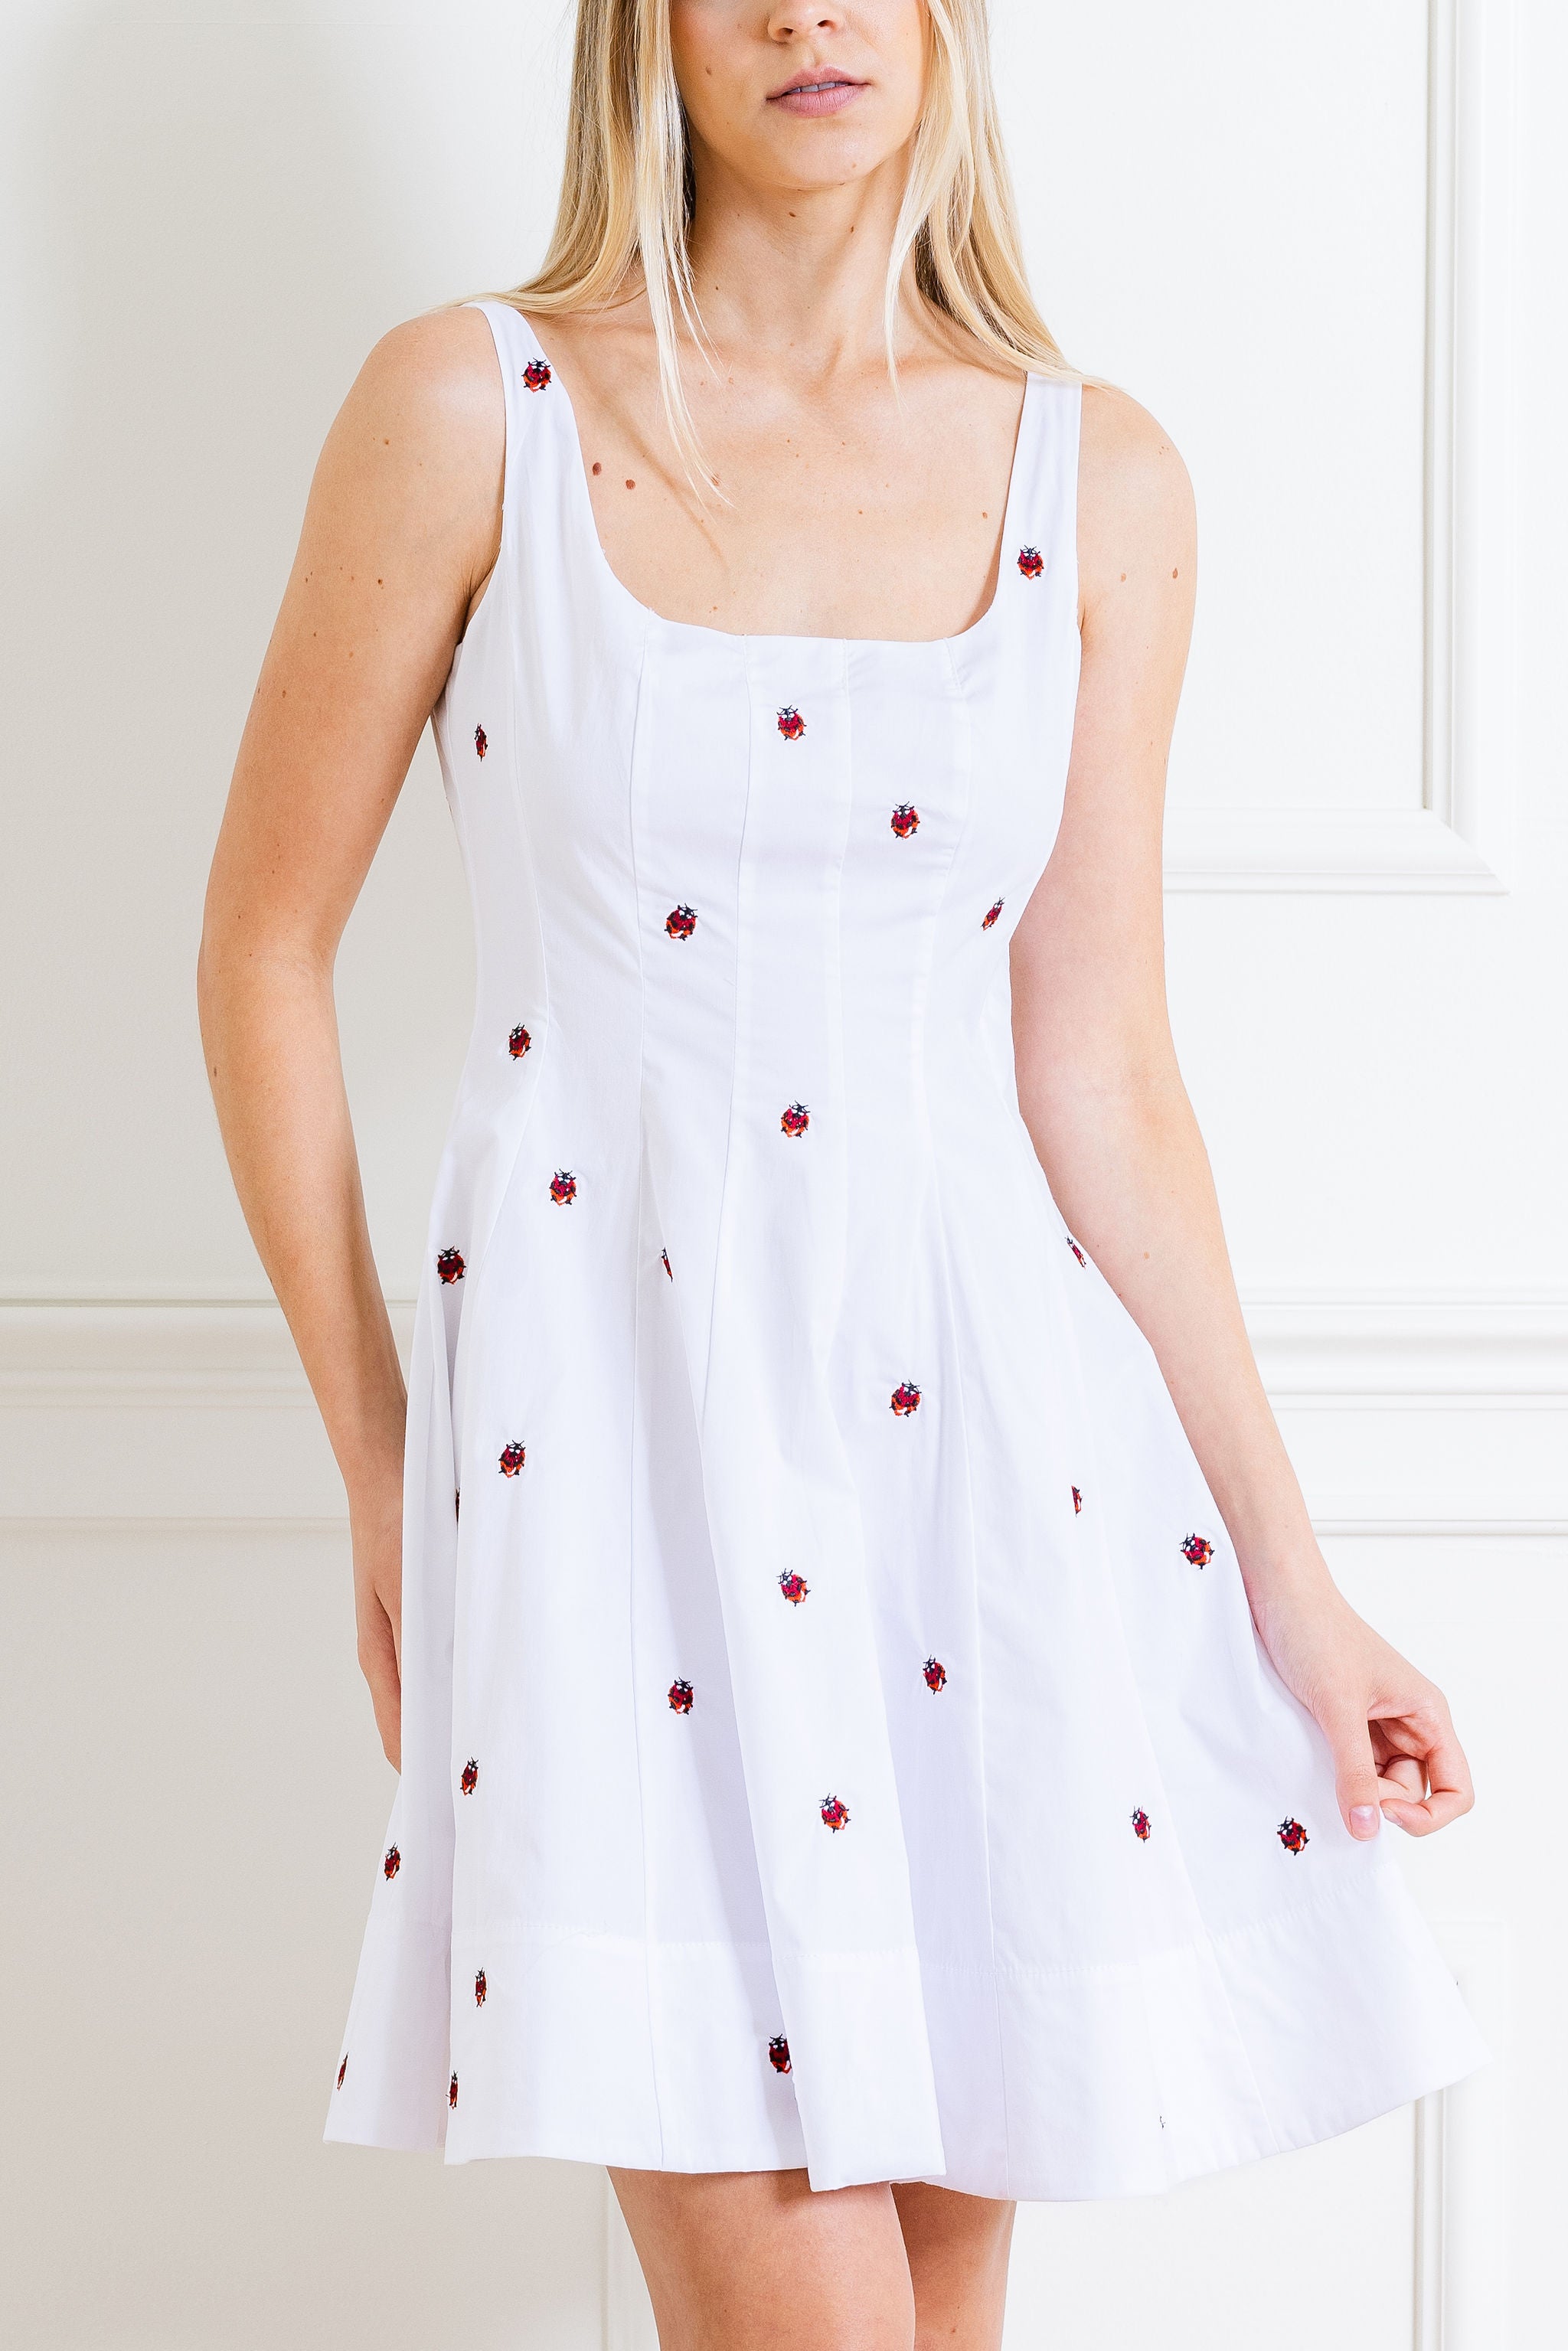 Mini Wells Ladybugs Dress